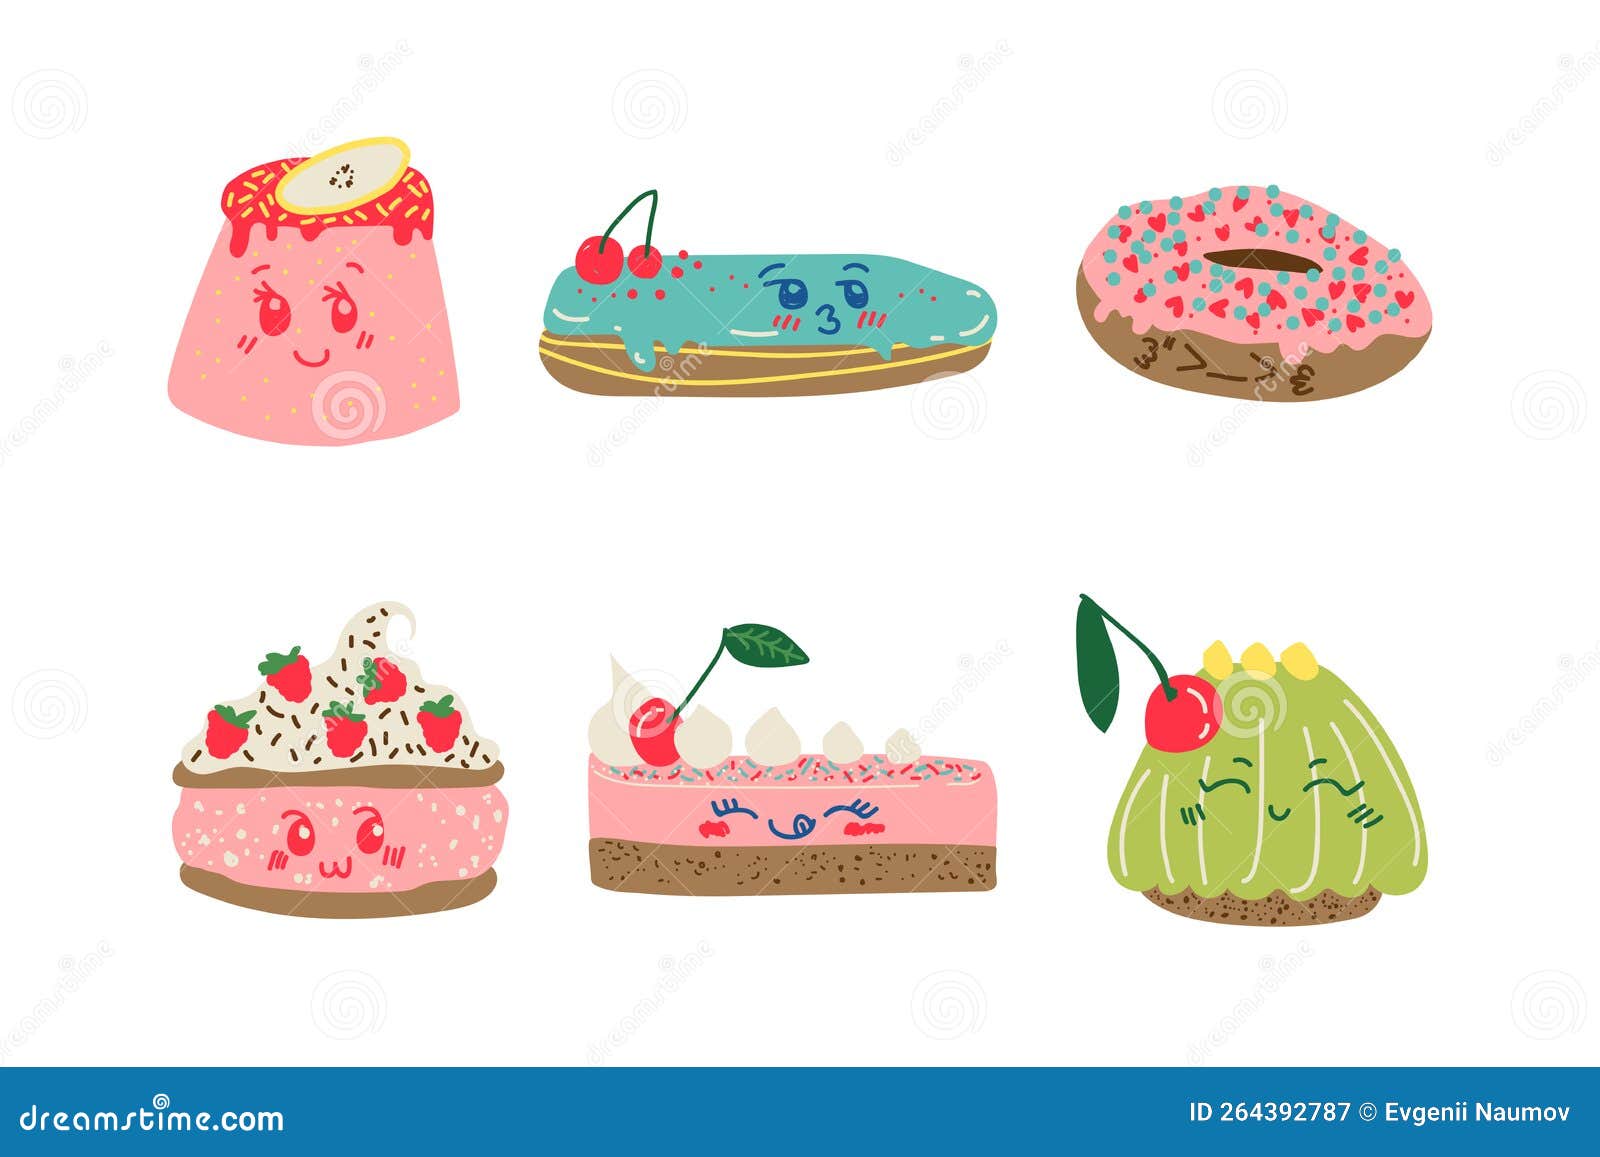 Set of Fun Stickers Desserts Kawaii Bakery Food Stock Vector